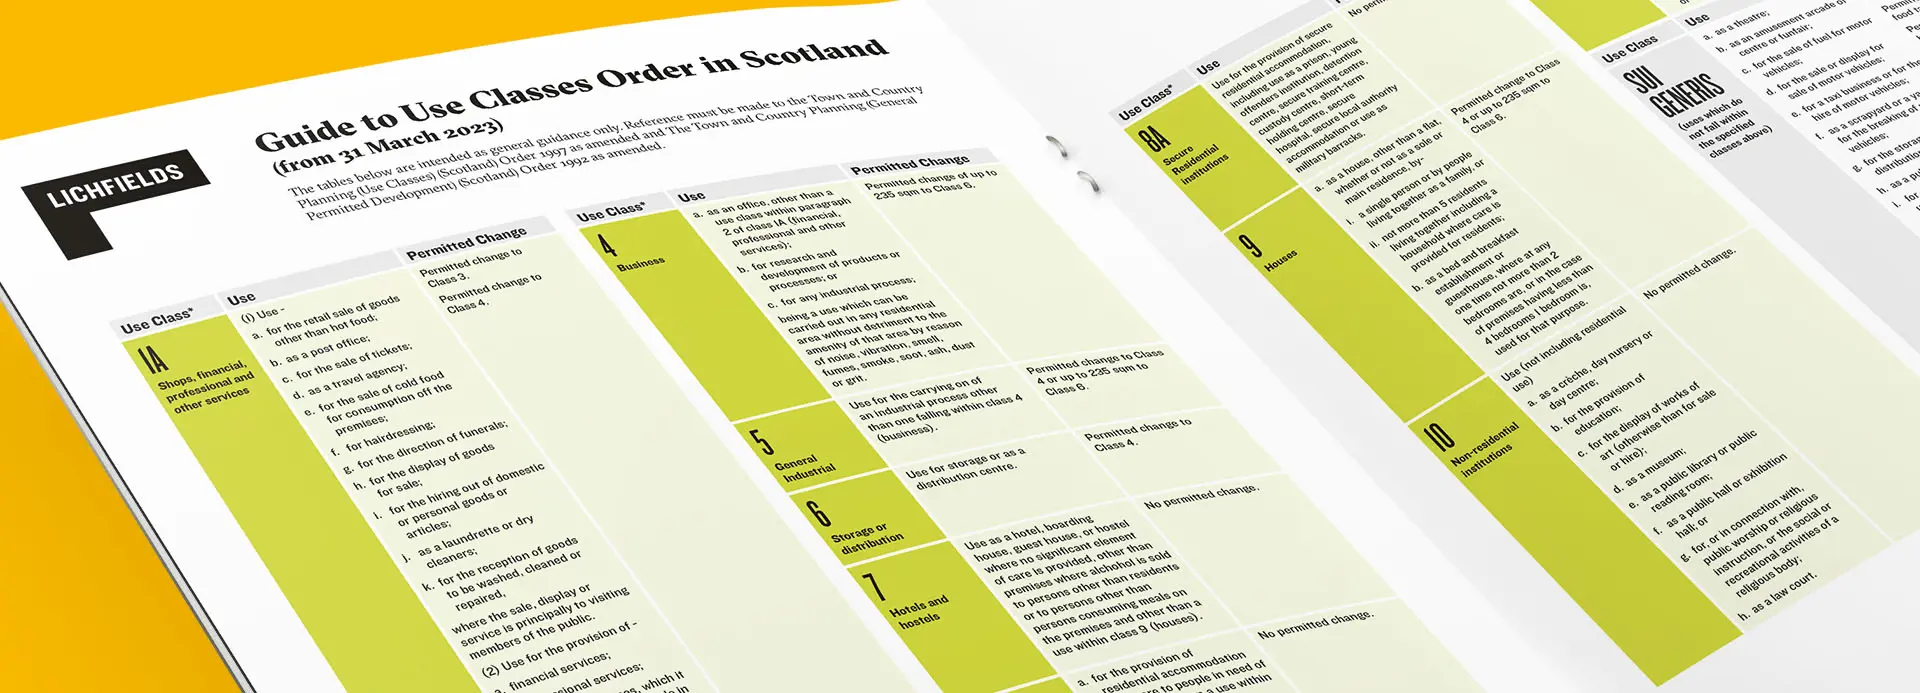 Use Classes Order Guide in Scotland 